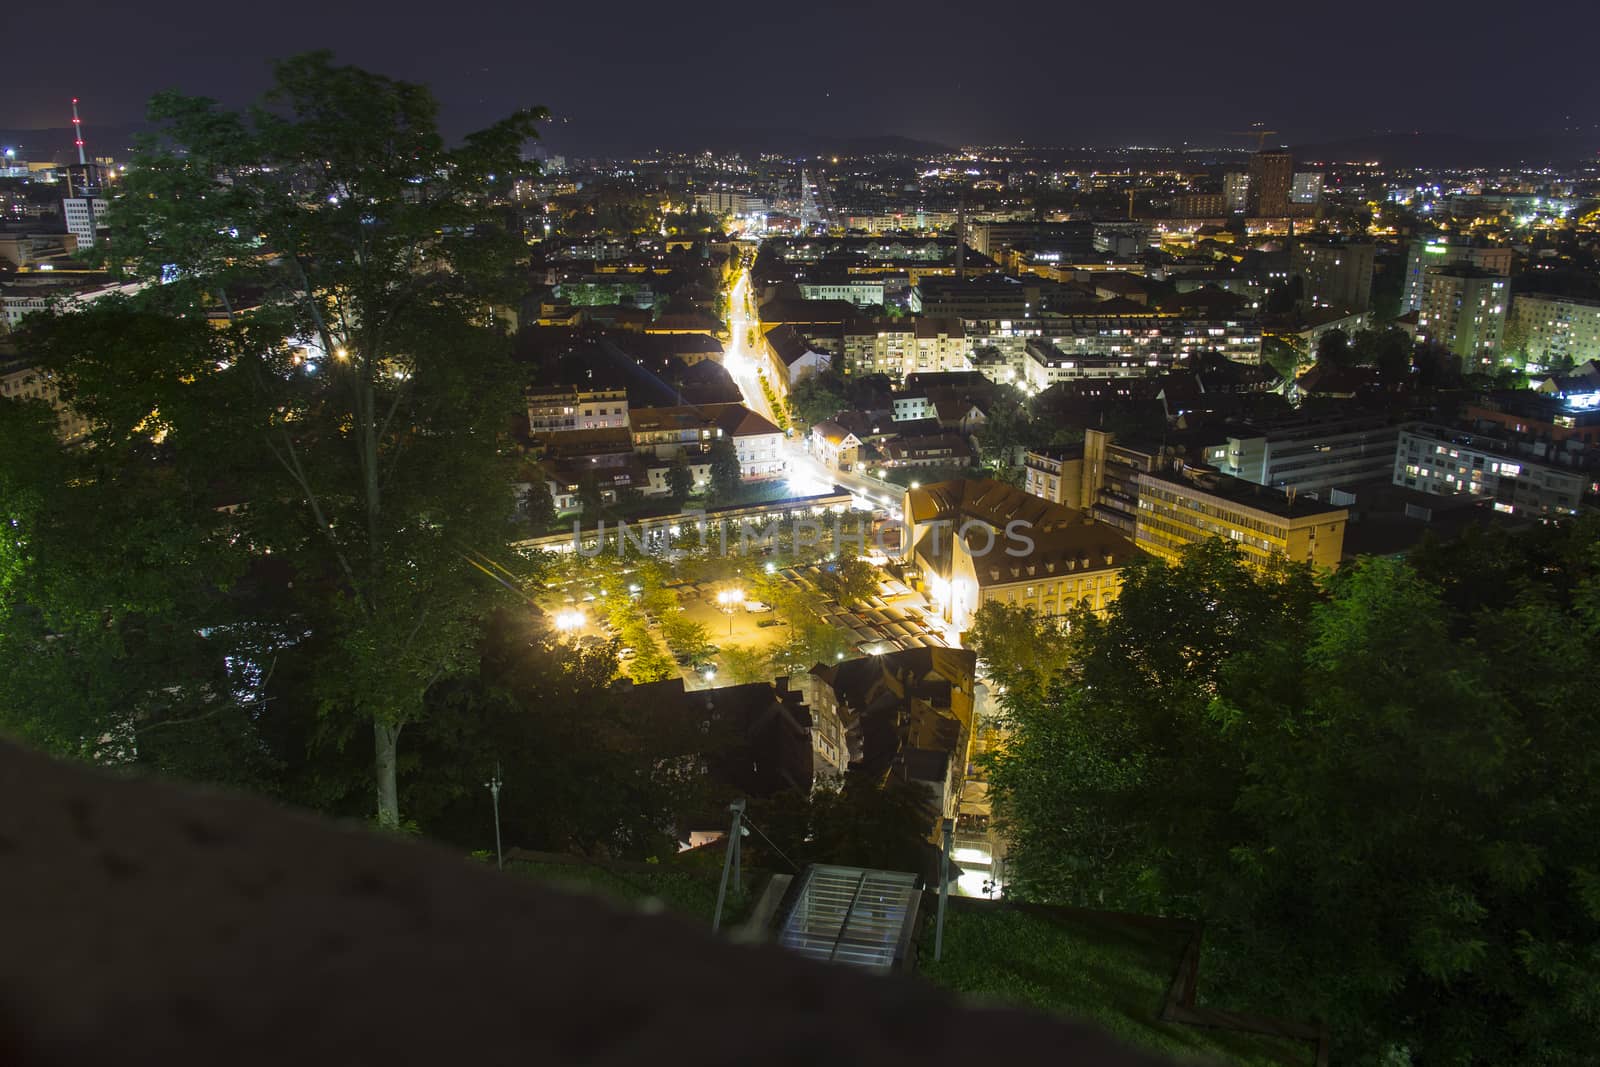 Ljubljana at night by Aarstudio